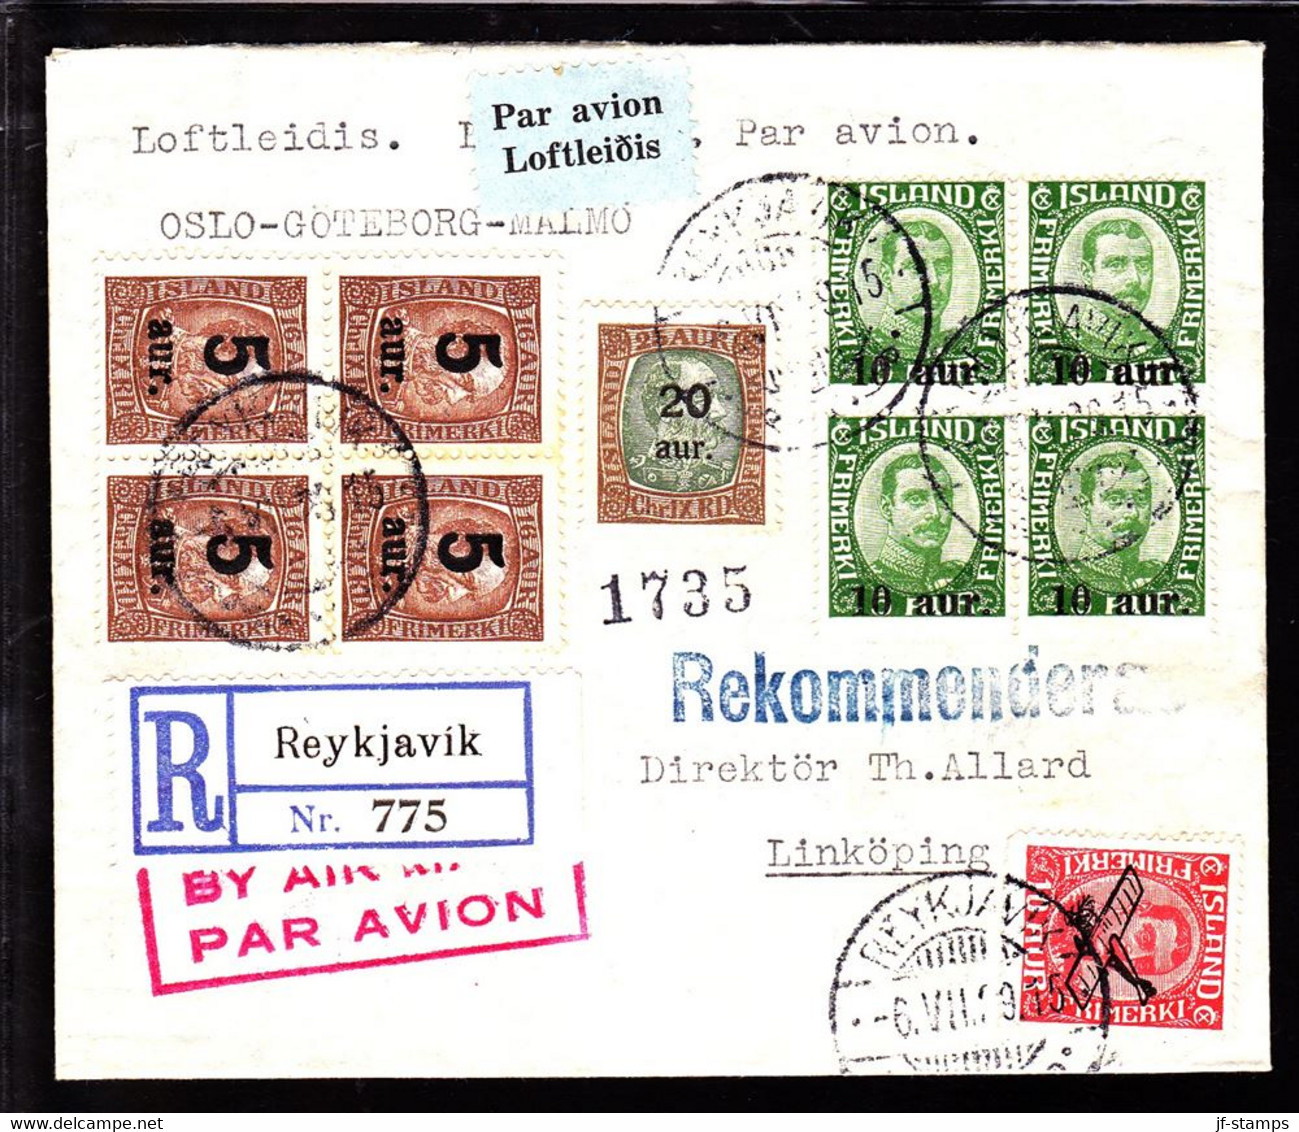 1929. Air Mail. 4-Bloc10 Aur On 5 Aur Green Chr. X, Air Mail 10 Aur 20 Aur/25 Aur + 4-Bloc 5... (Michel 110+) - JF103812 - Lettres & Documents